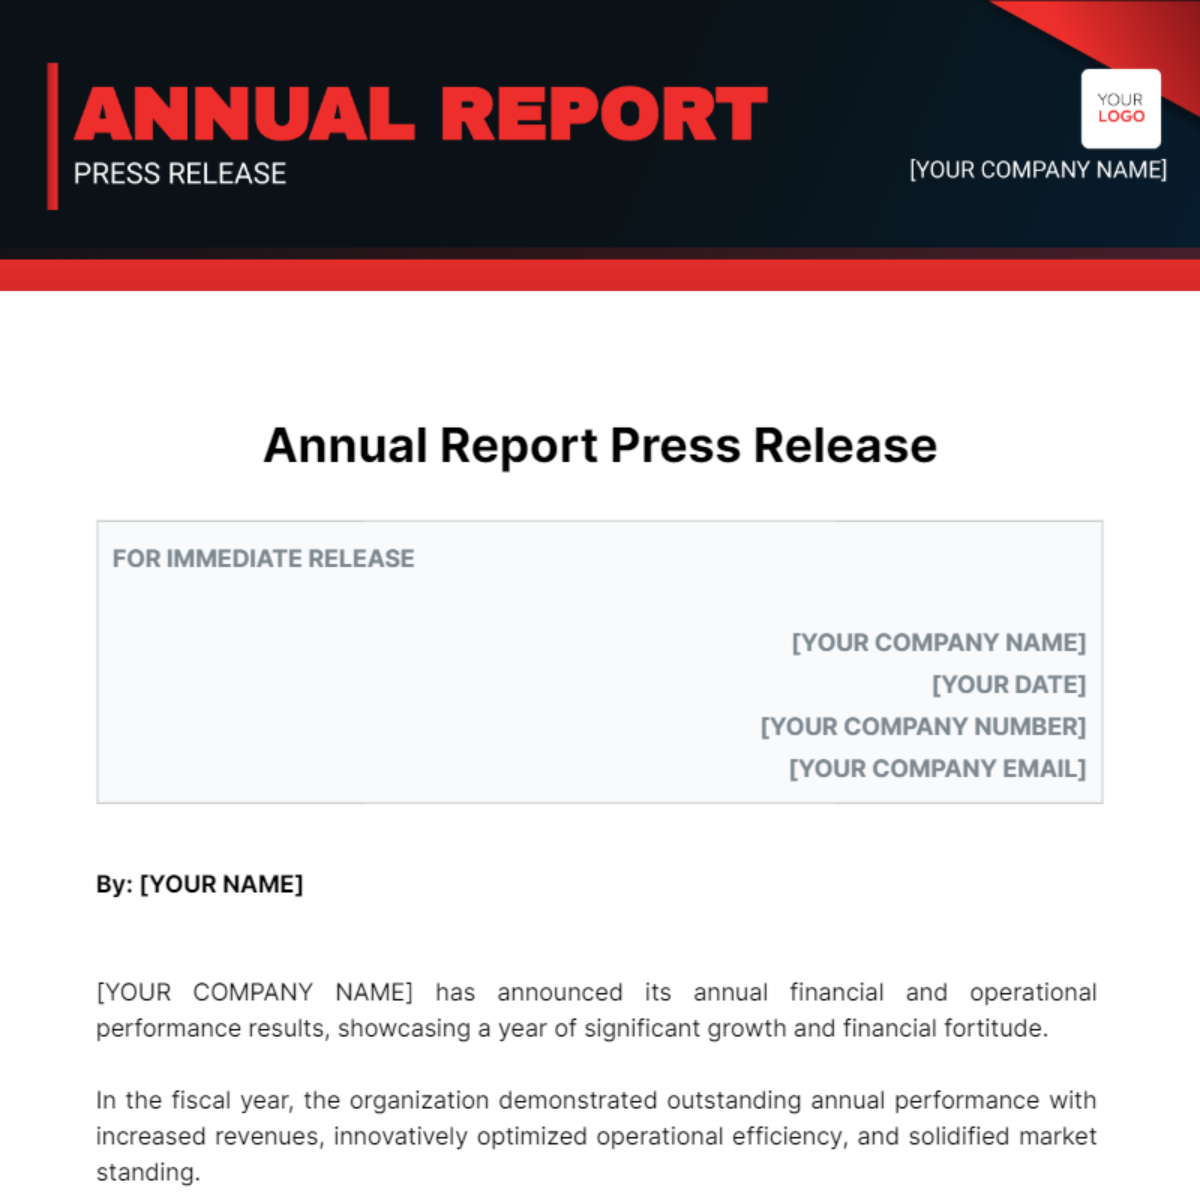 Free Annual Report Press Release Template